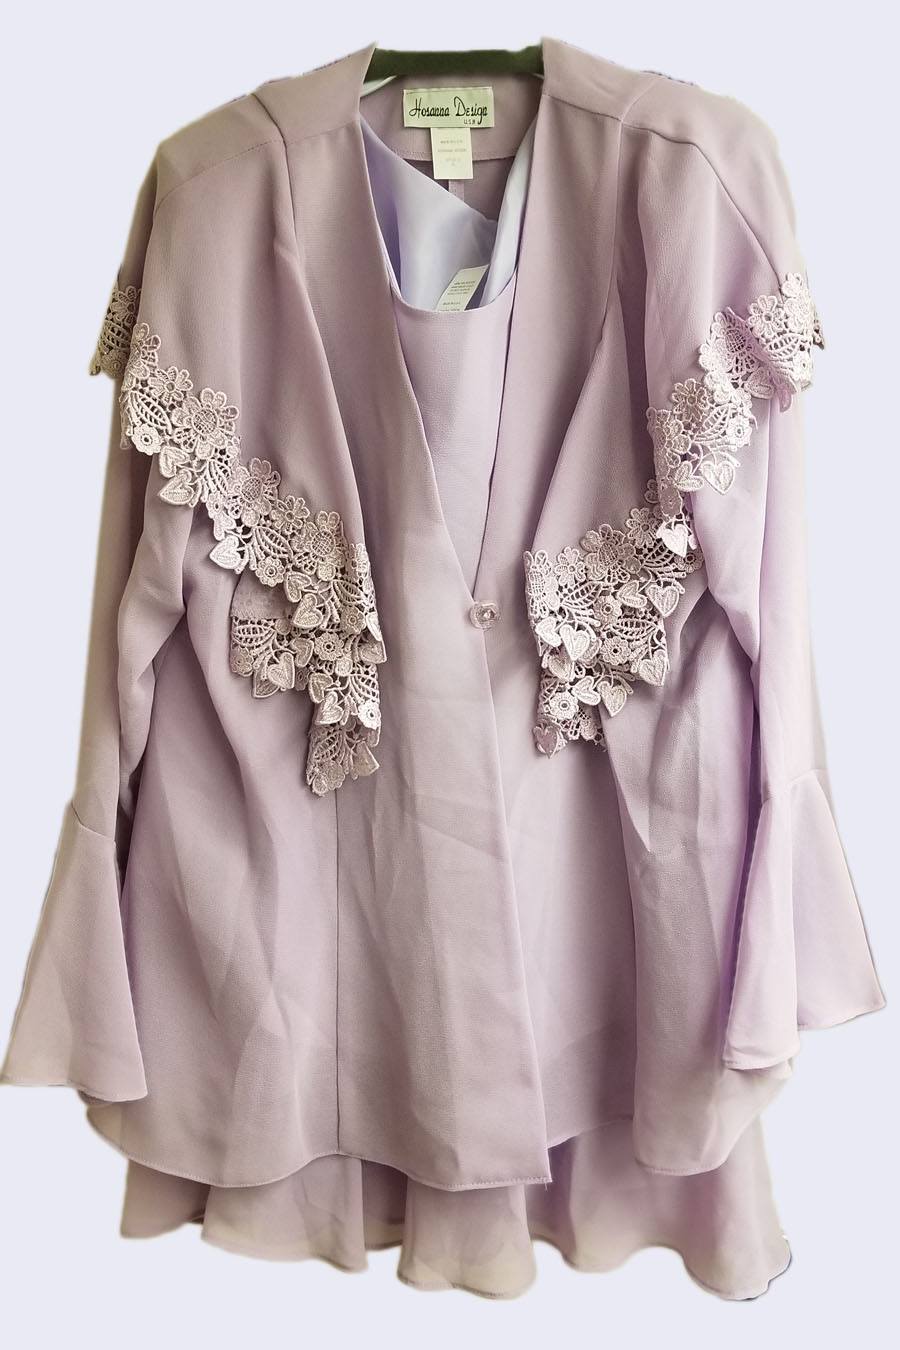 CLEARANCE - Hosanna 5162 Tea Length Lilac Dress 3-Piece with Jacket (Size XL)